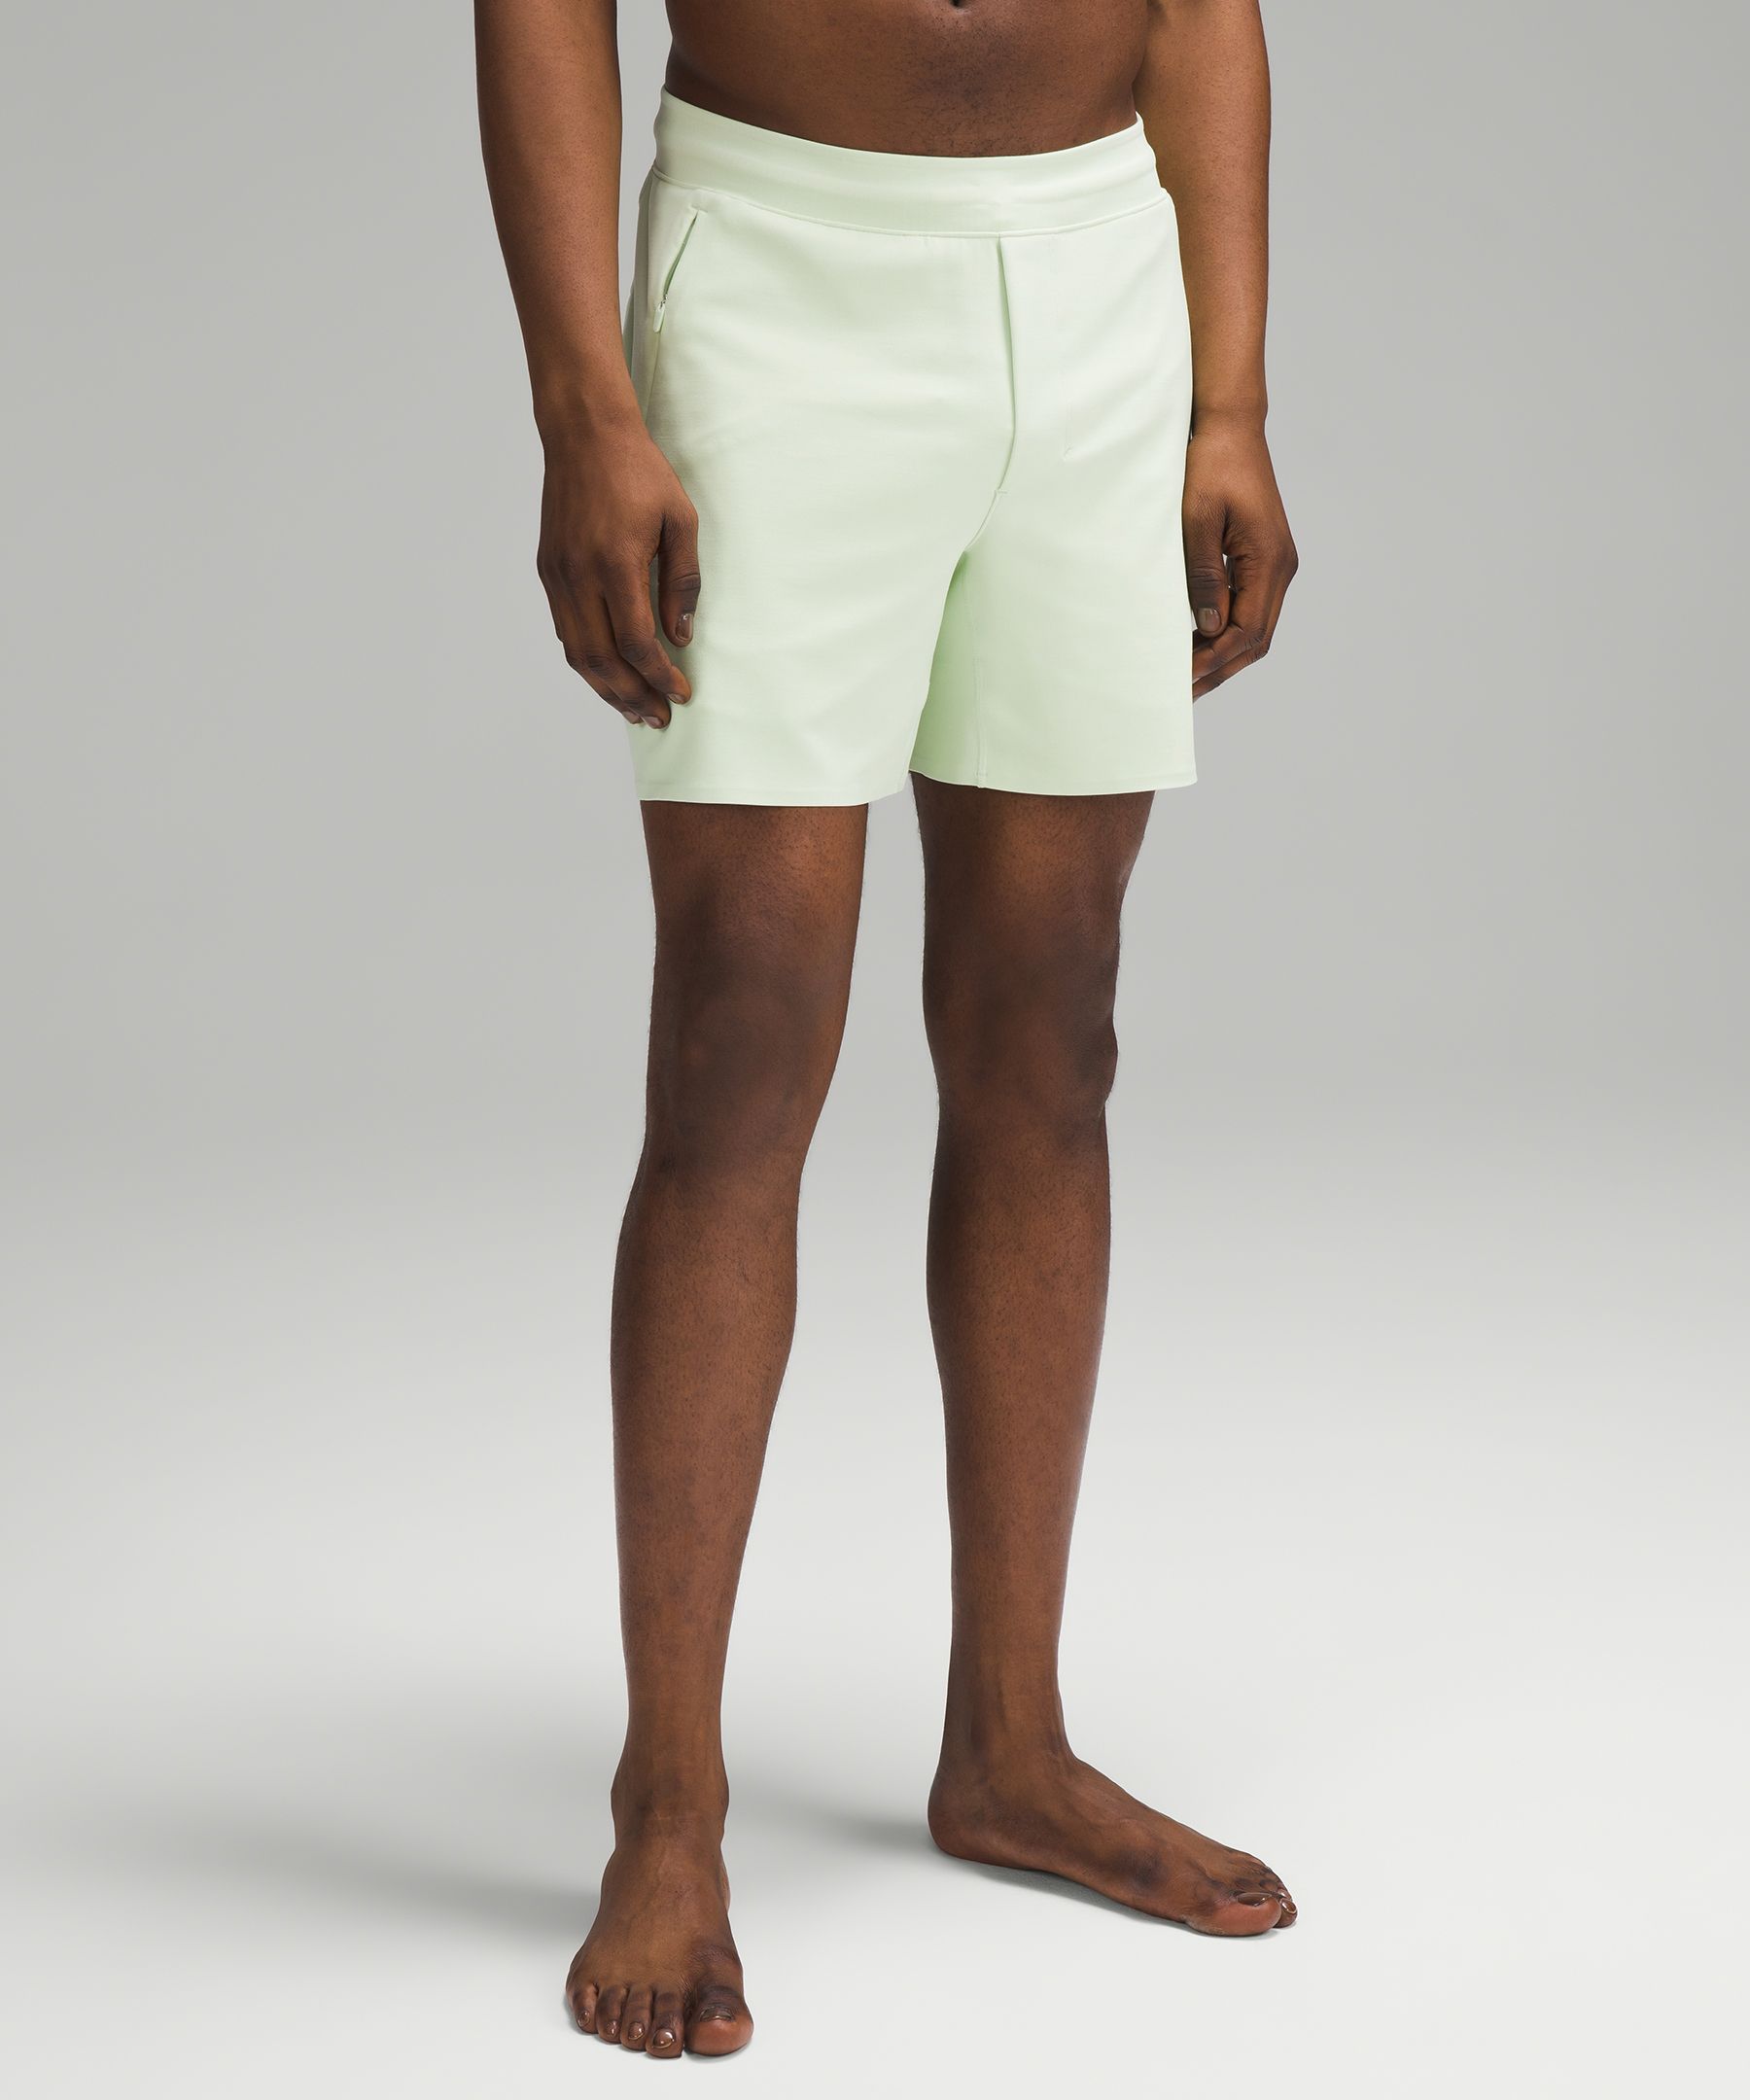 lululemon athletica, Shorts, Lululemon Align Shorts Kohlrabi Green 6in  Size